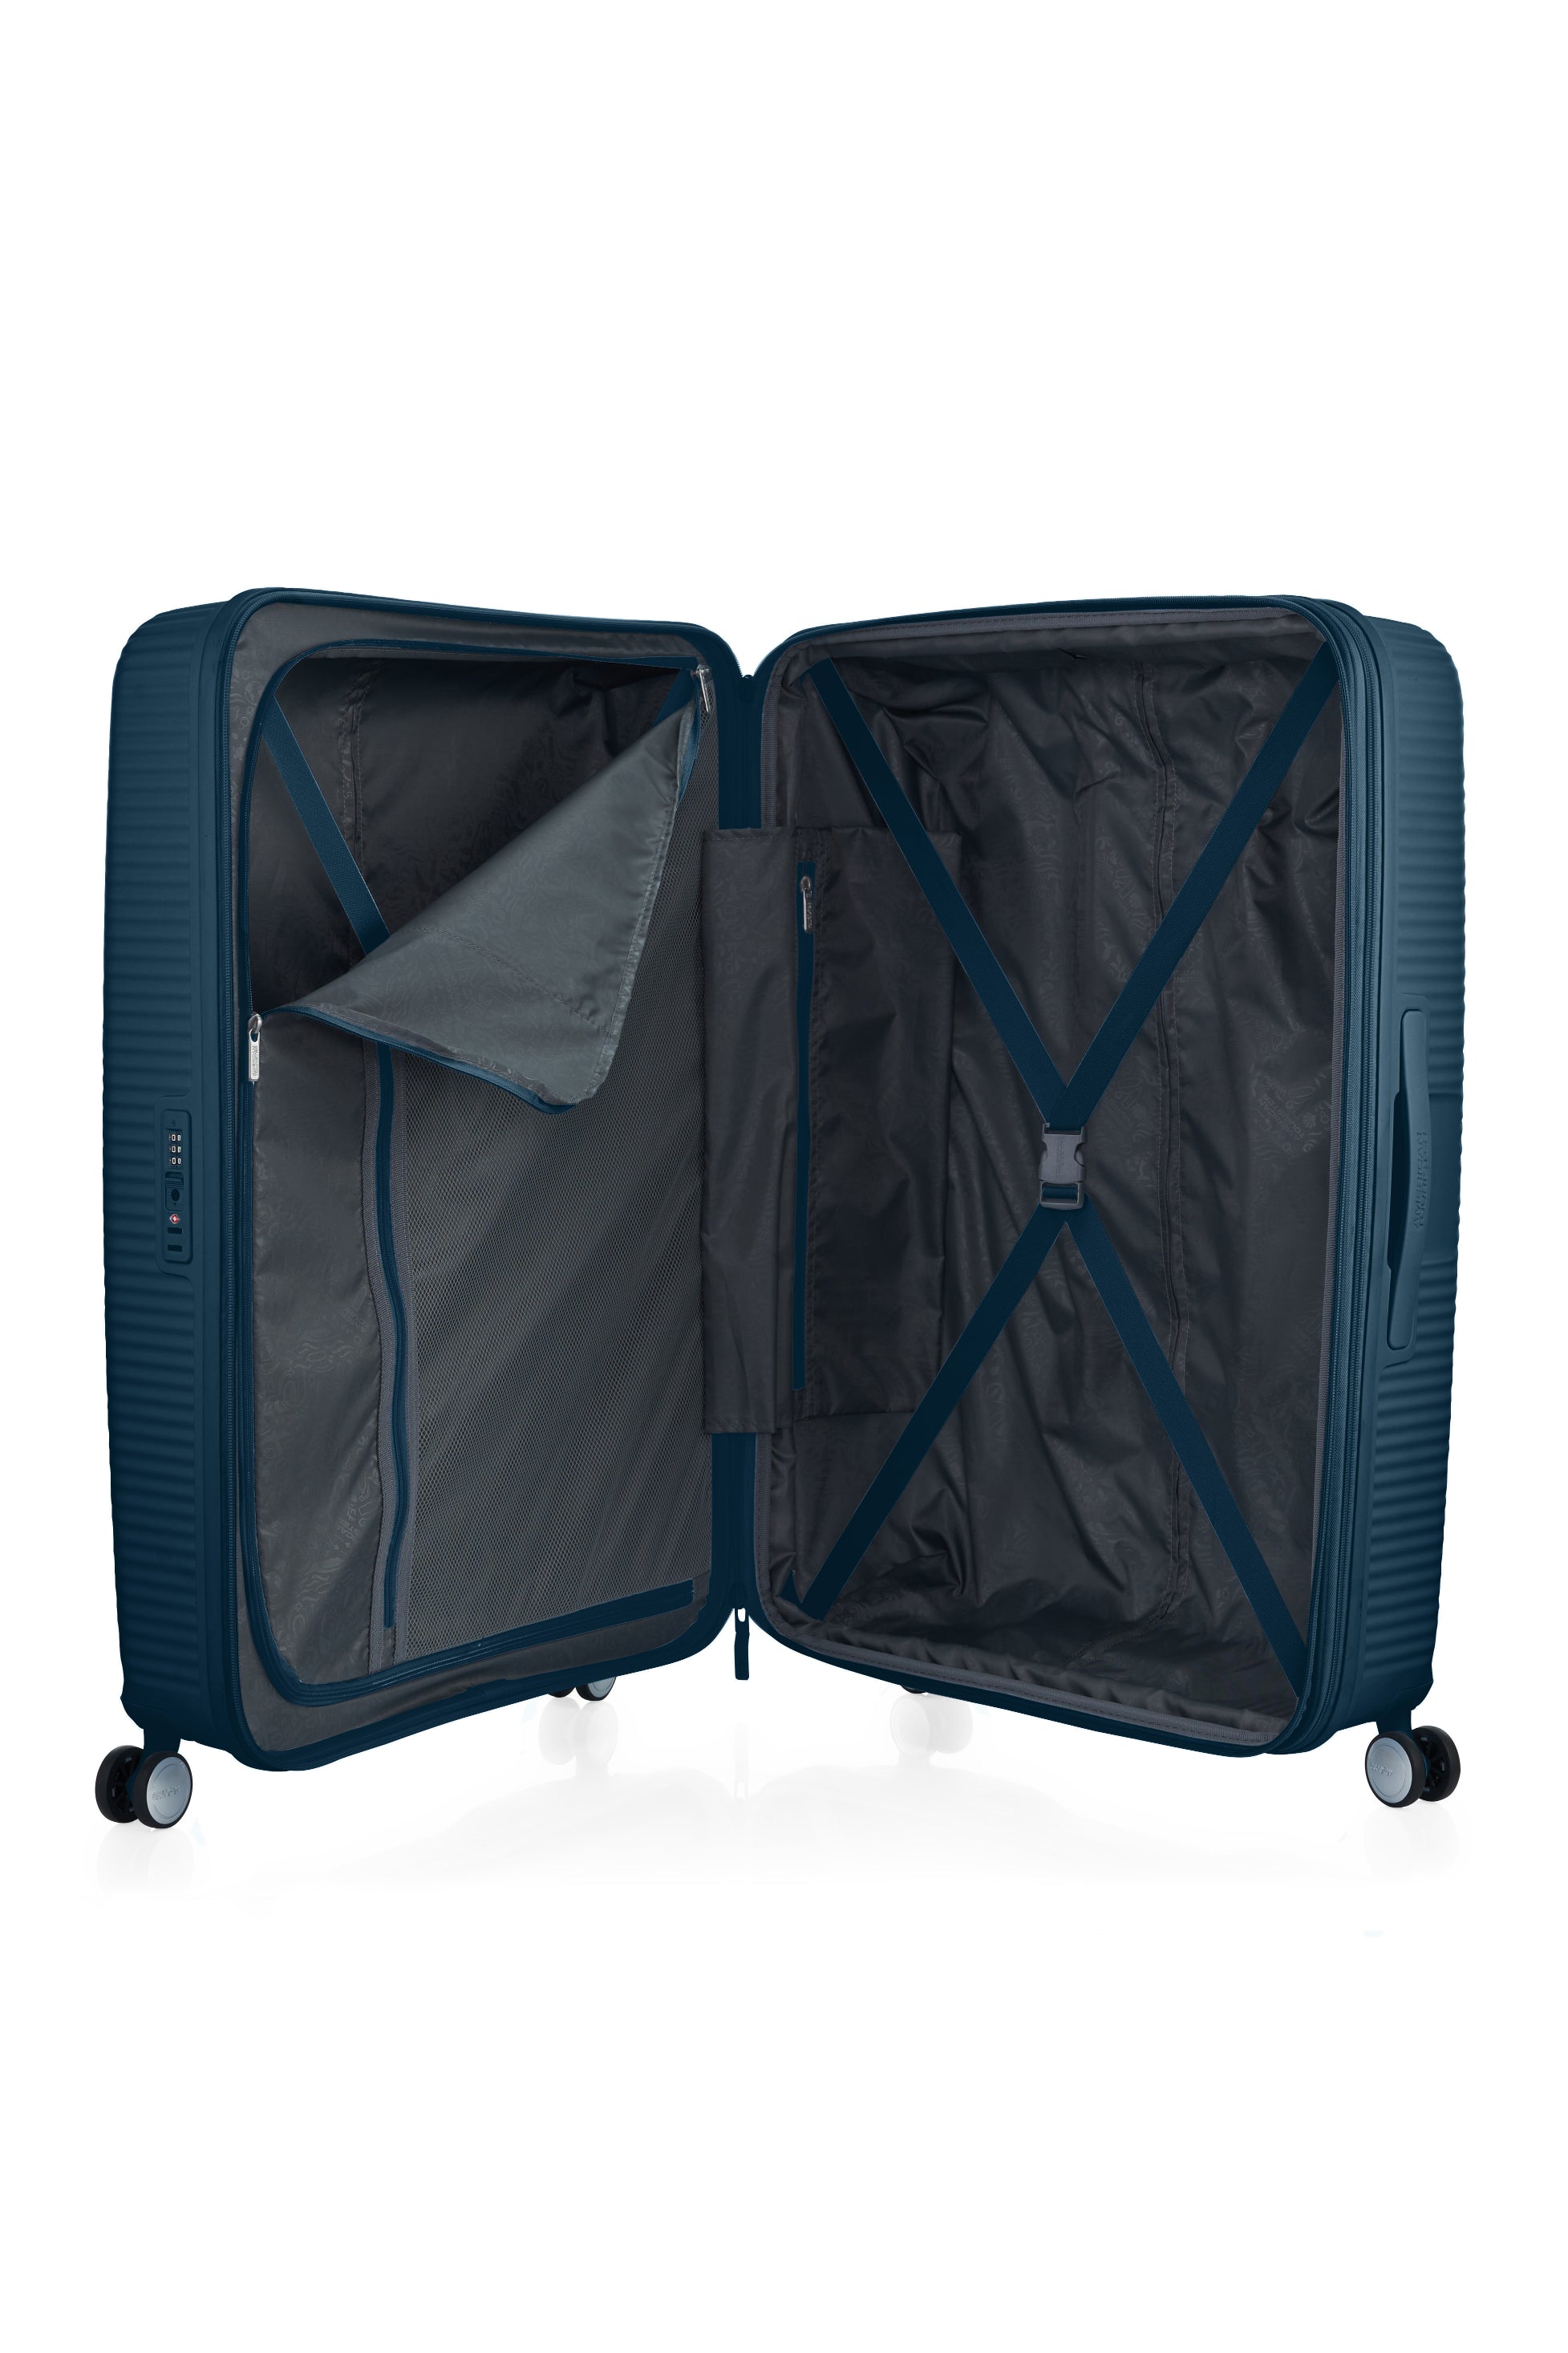 American Tourister - Curio 2.0 80cm Large Suitcase - Varsity Green-5